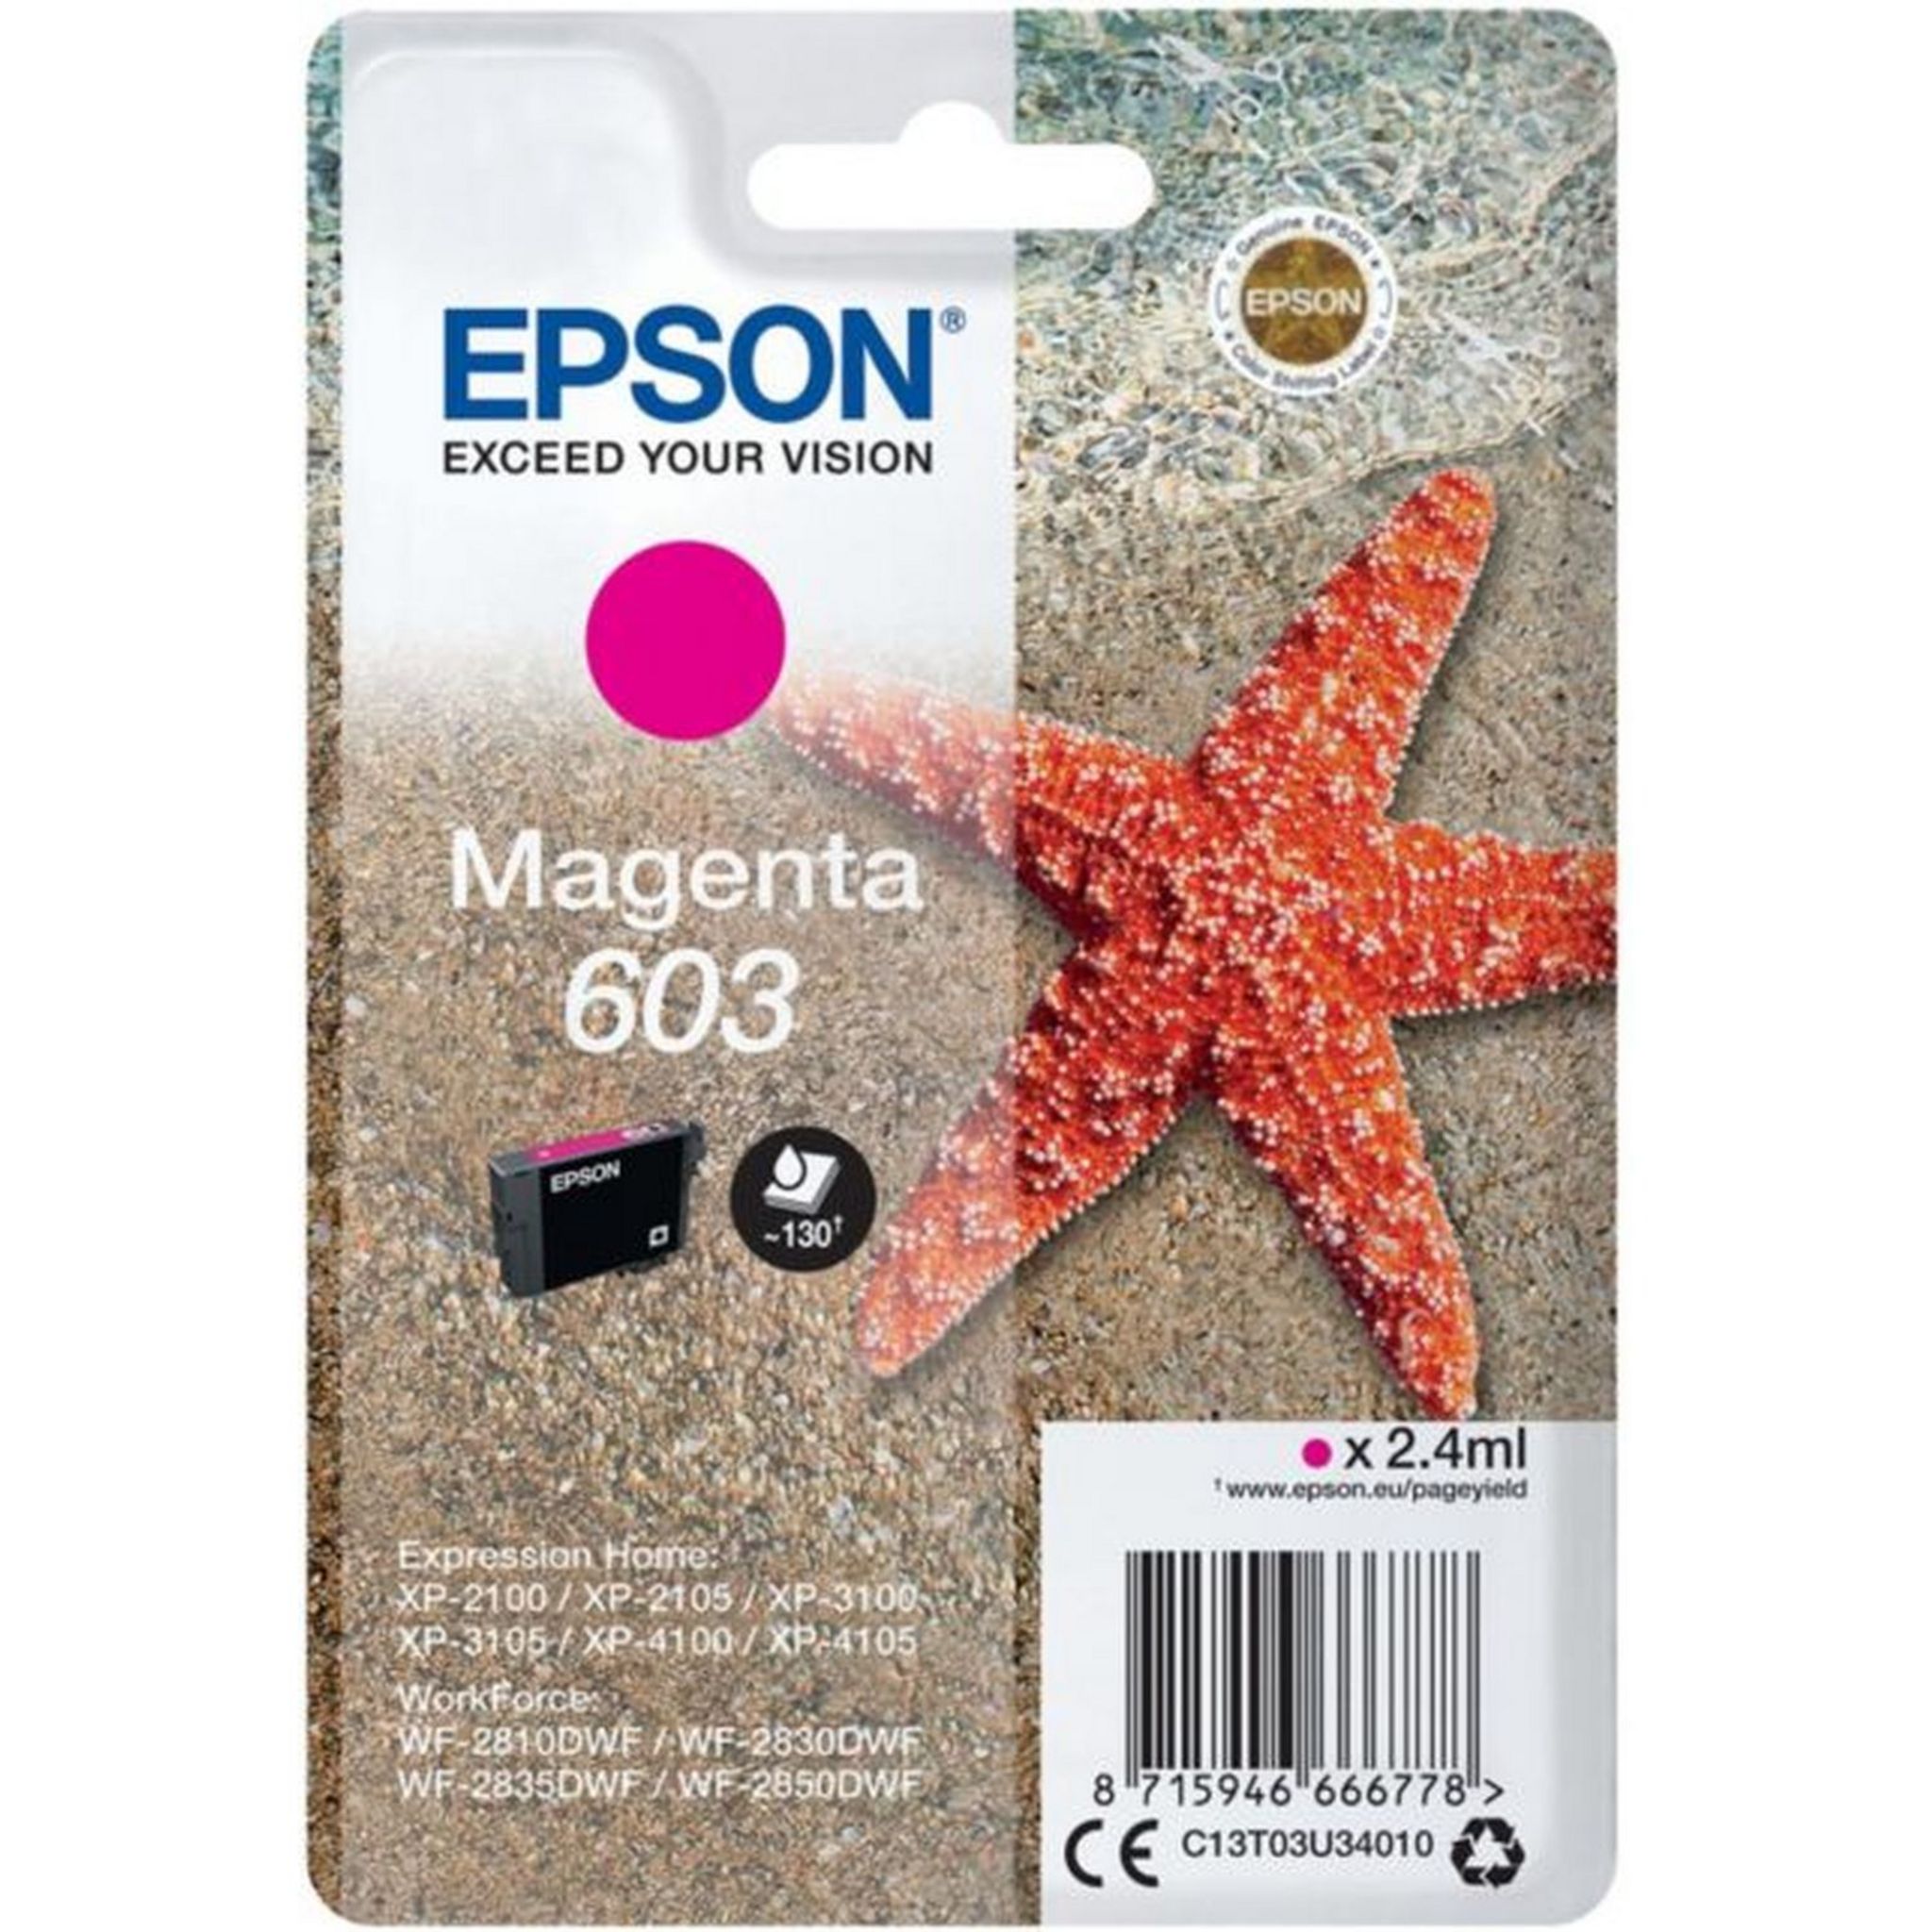 Promo Epson pack de 4 cartouches d'encre etoile de mer 603 chez Casino  Hyperfrais